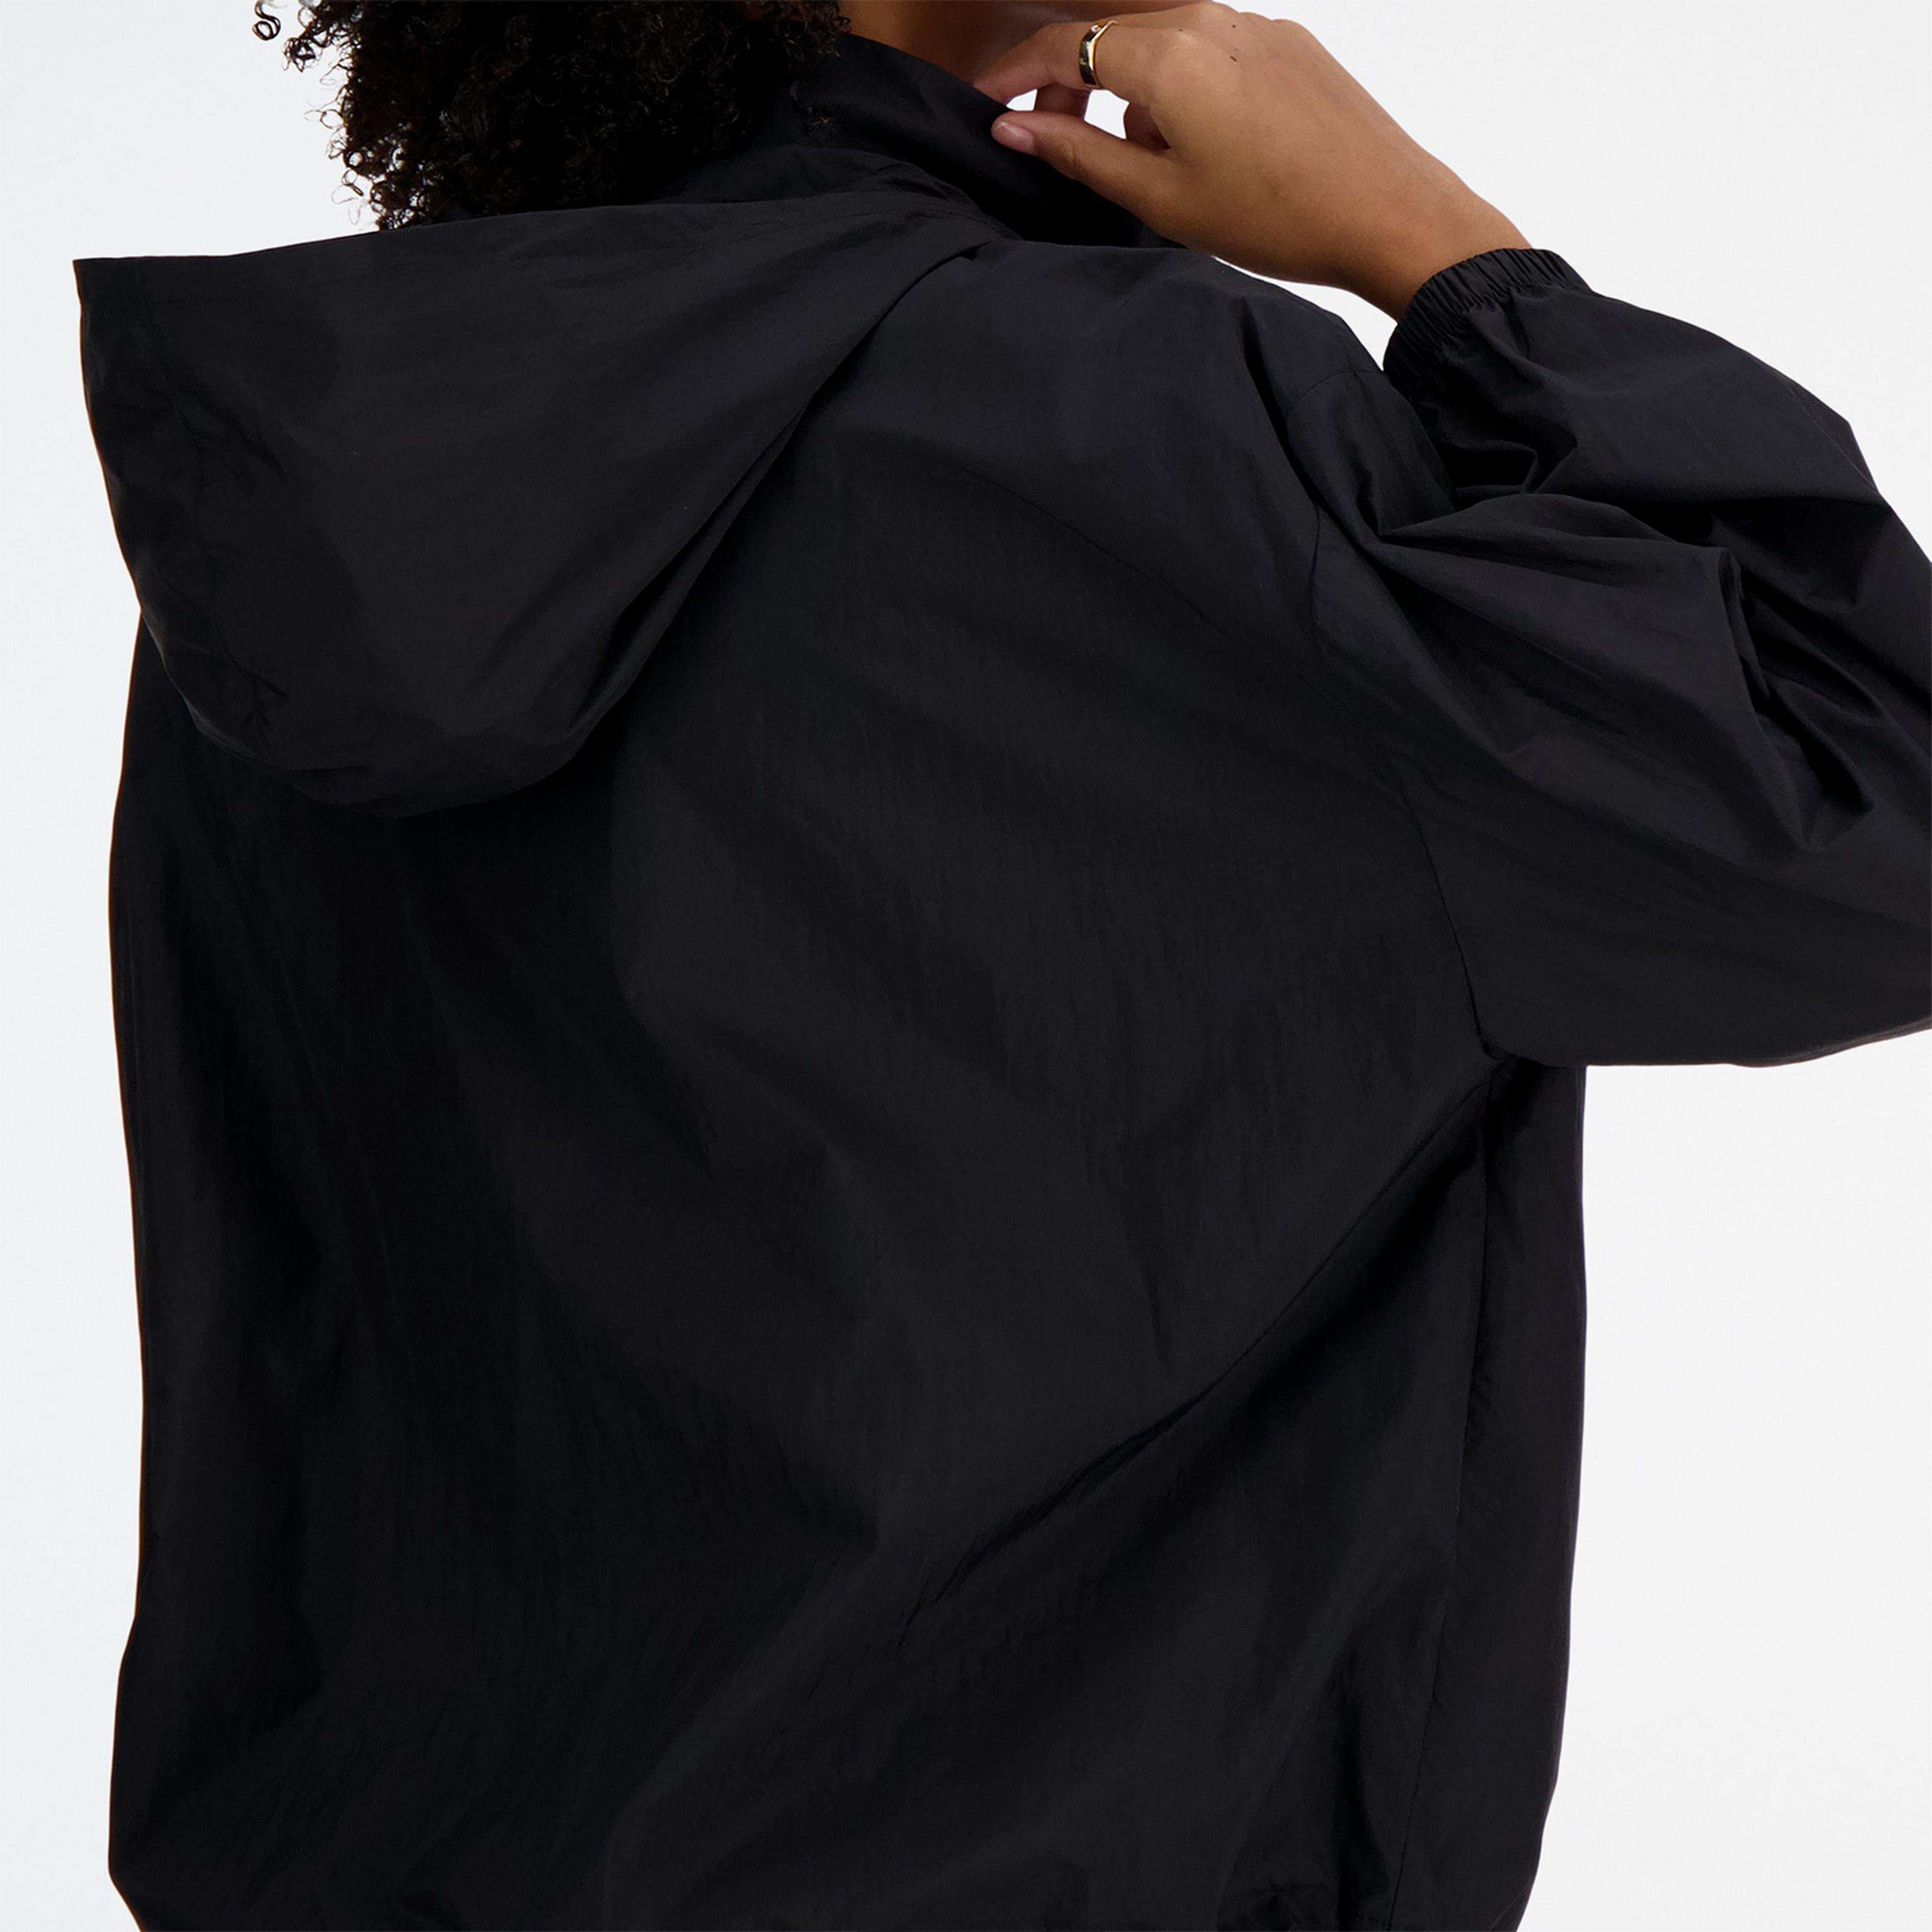 New Balance Woven Kadın Siyah Ceket